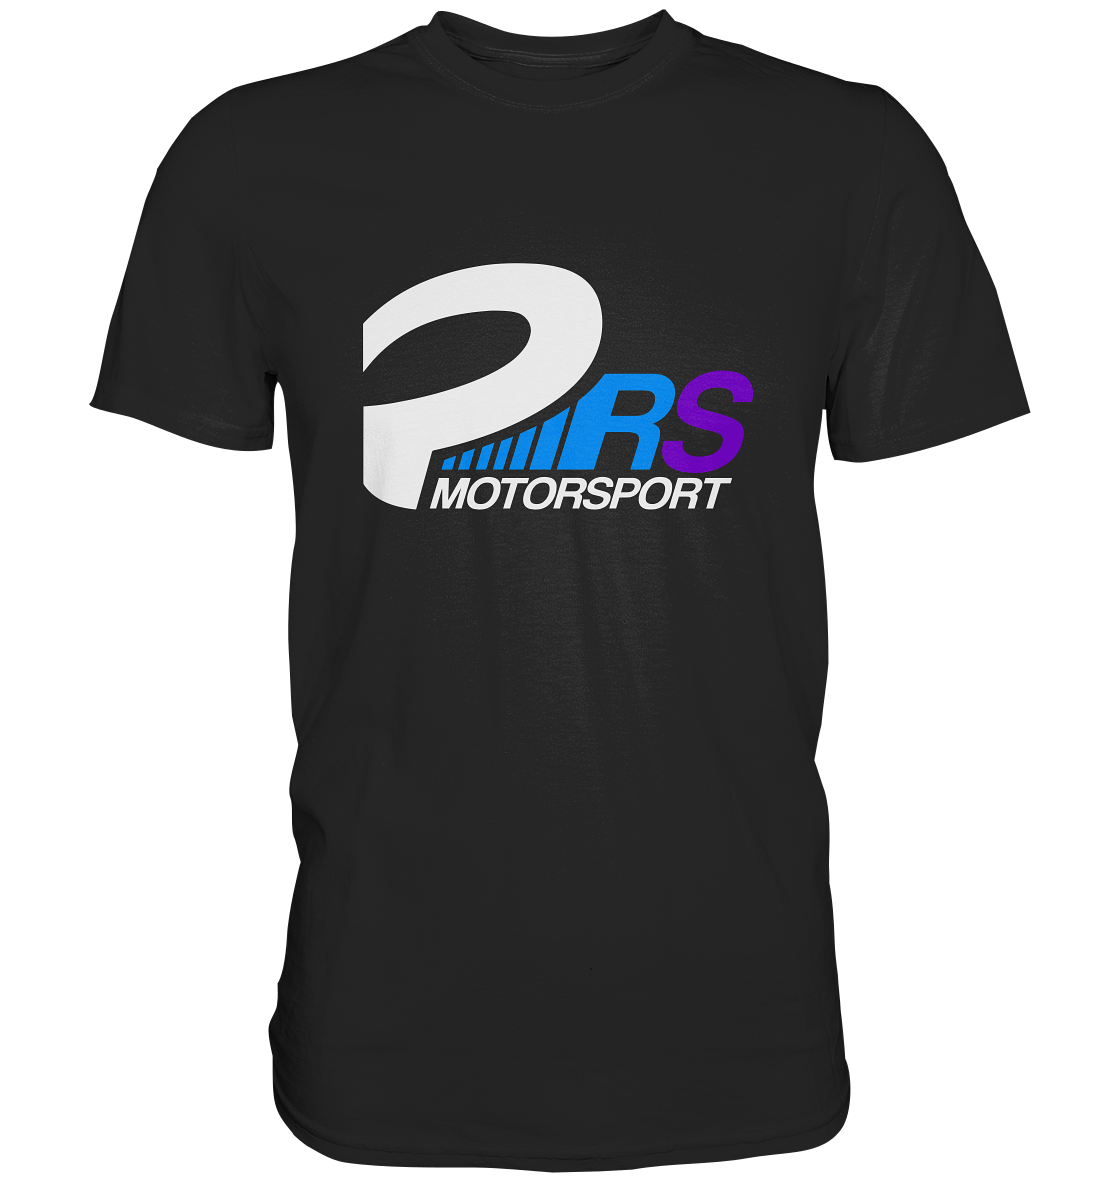 PRS MOTORSPORT - Basic Shirt